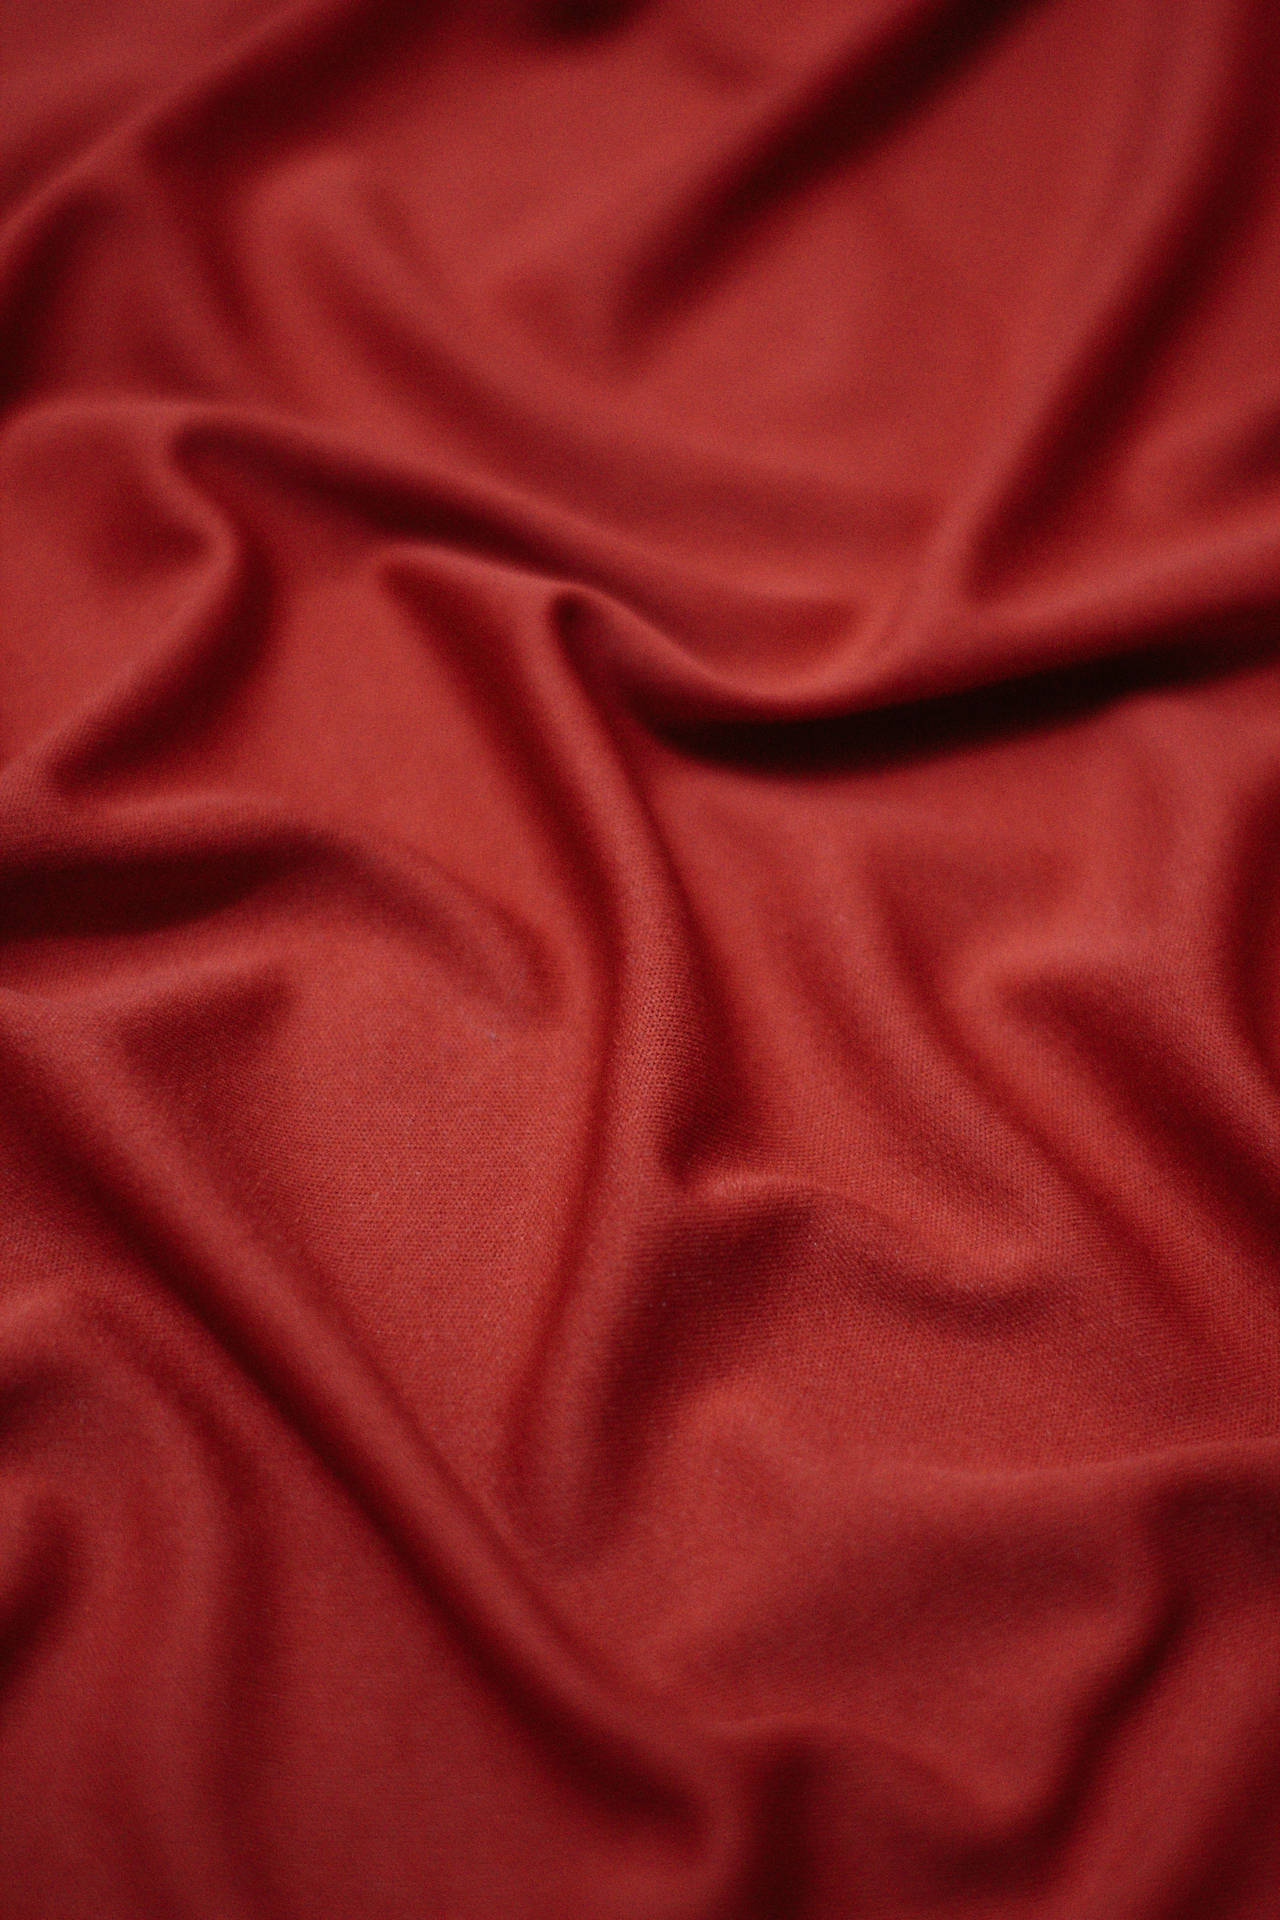 Stylish Red Fabric Wallpaper